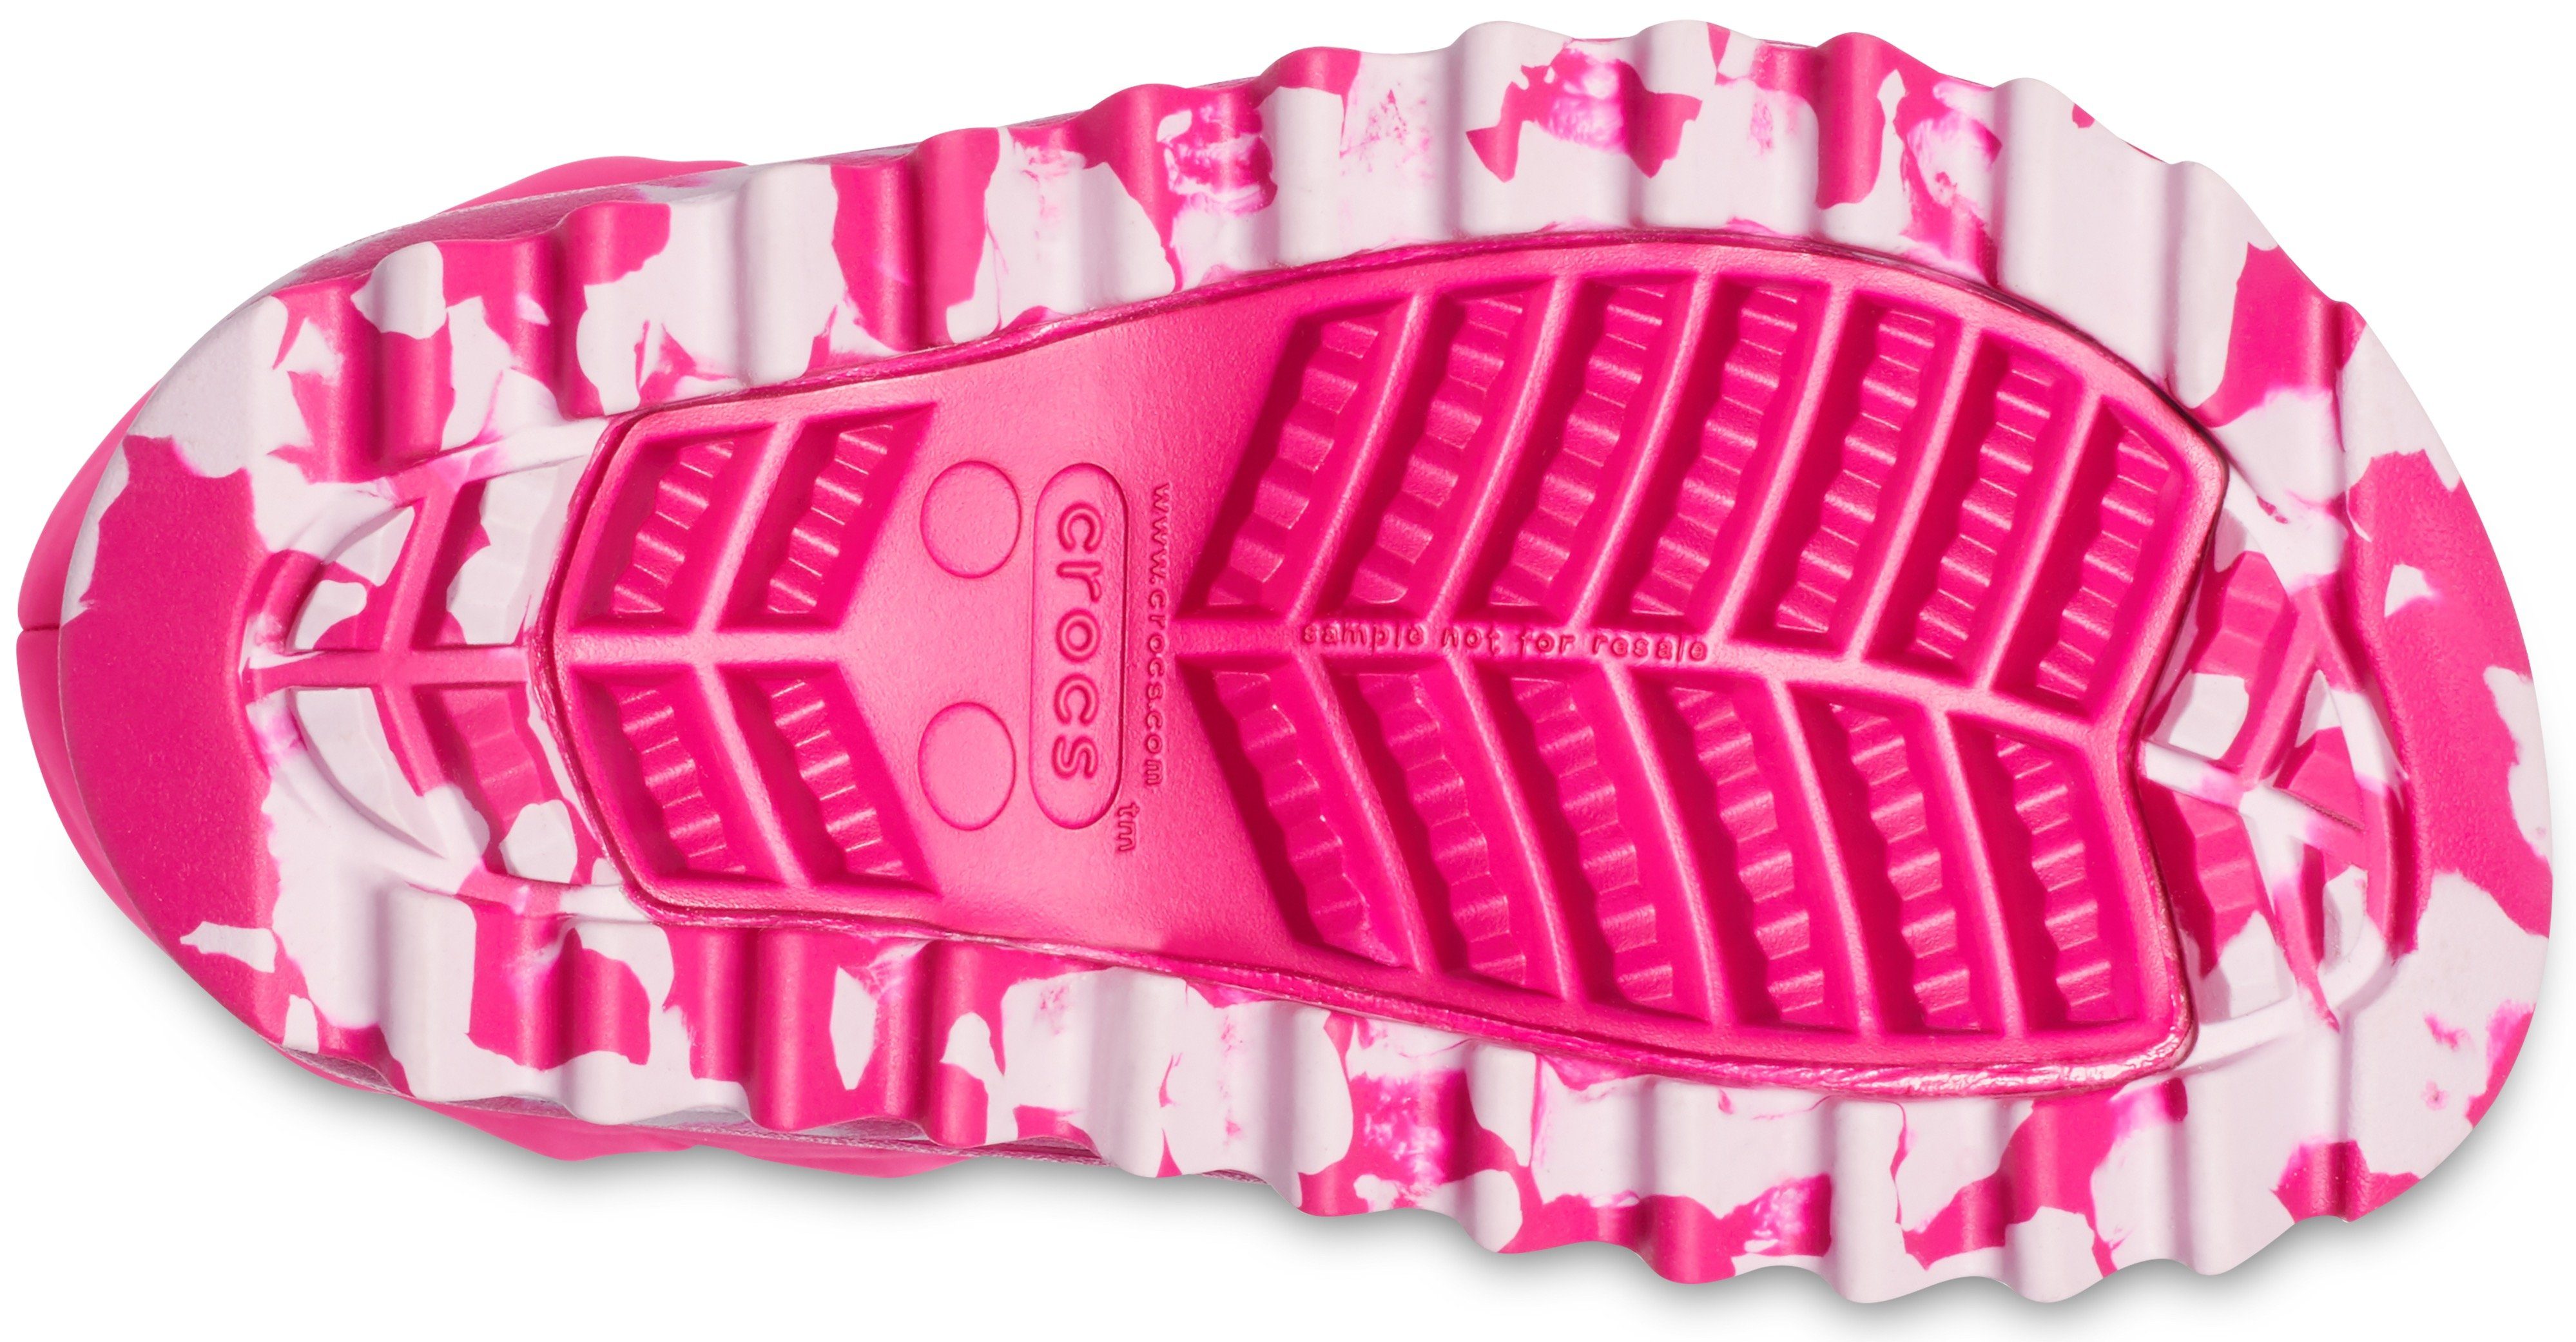 pink-kombiniert zum PUFF Schlupfen Crocs CLASSIC BOOT K Winterboots NEO